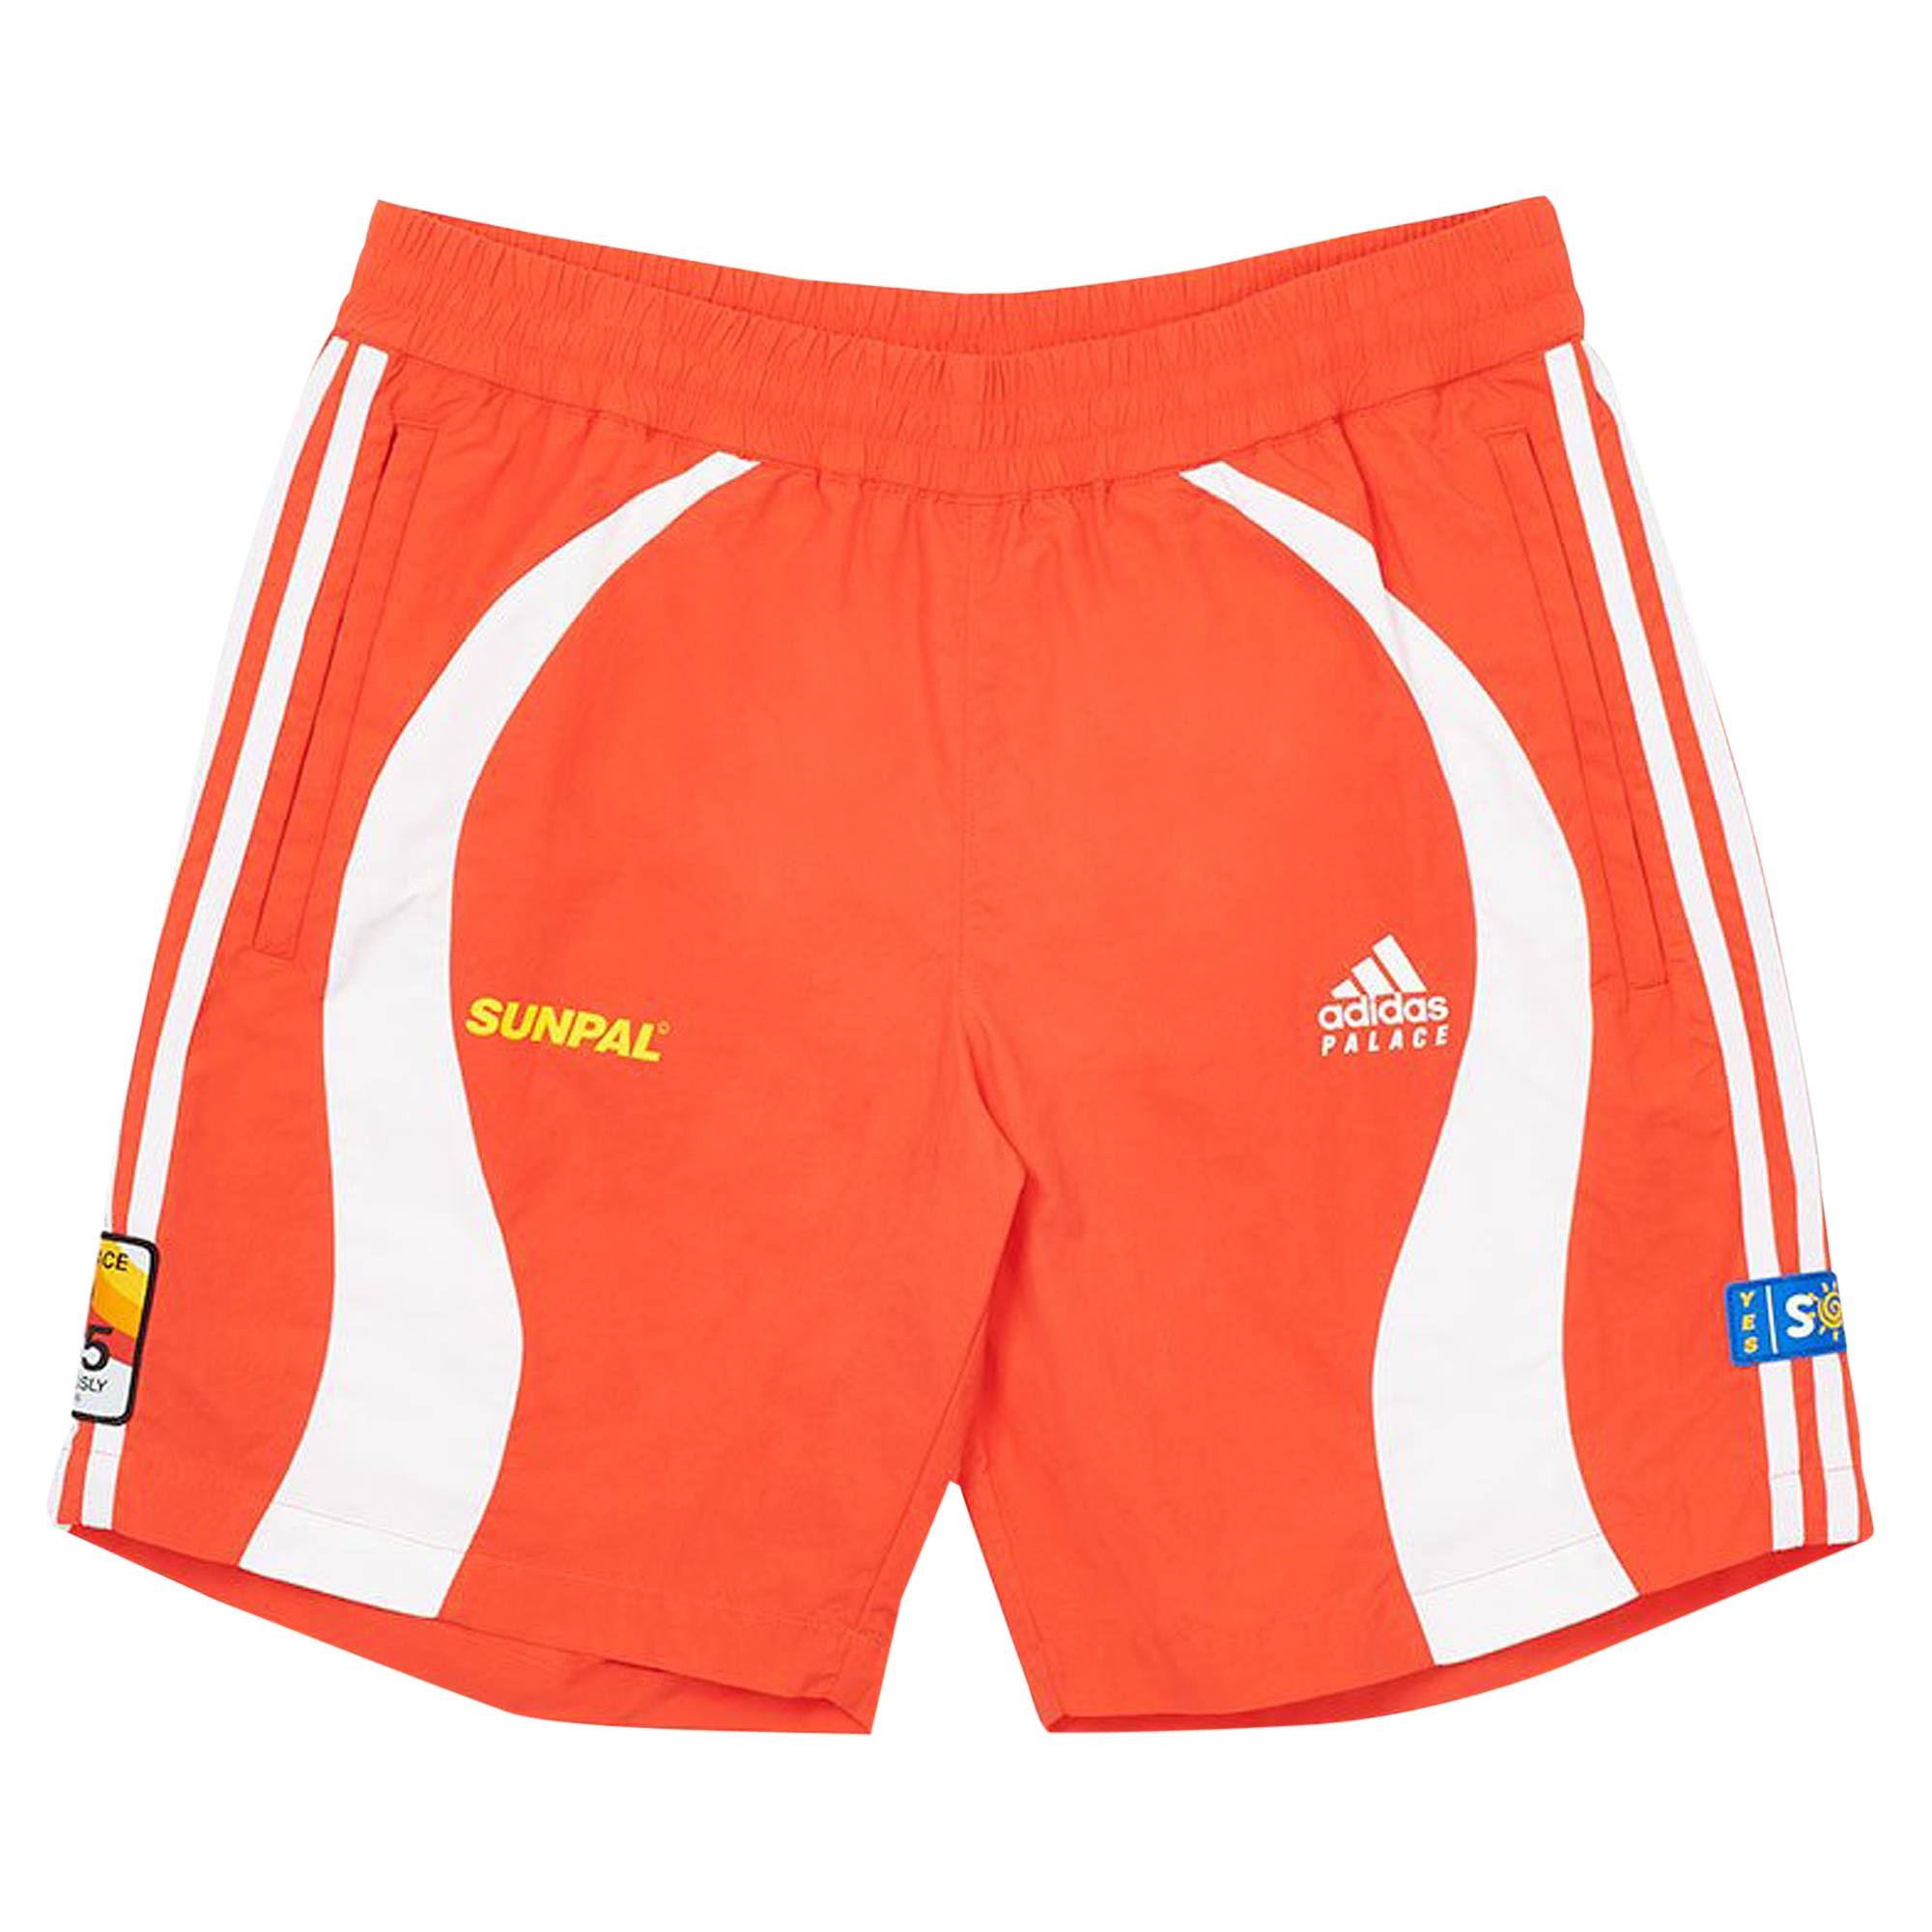 Palace x adidas Sunpal Shorts 'Bright Orange' - 1